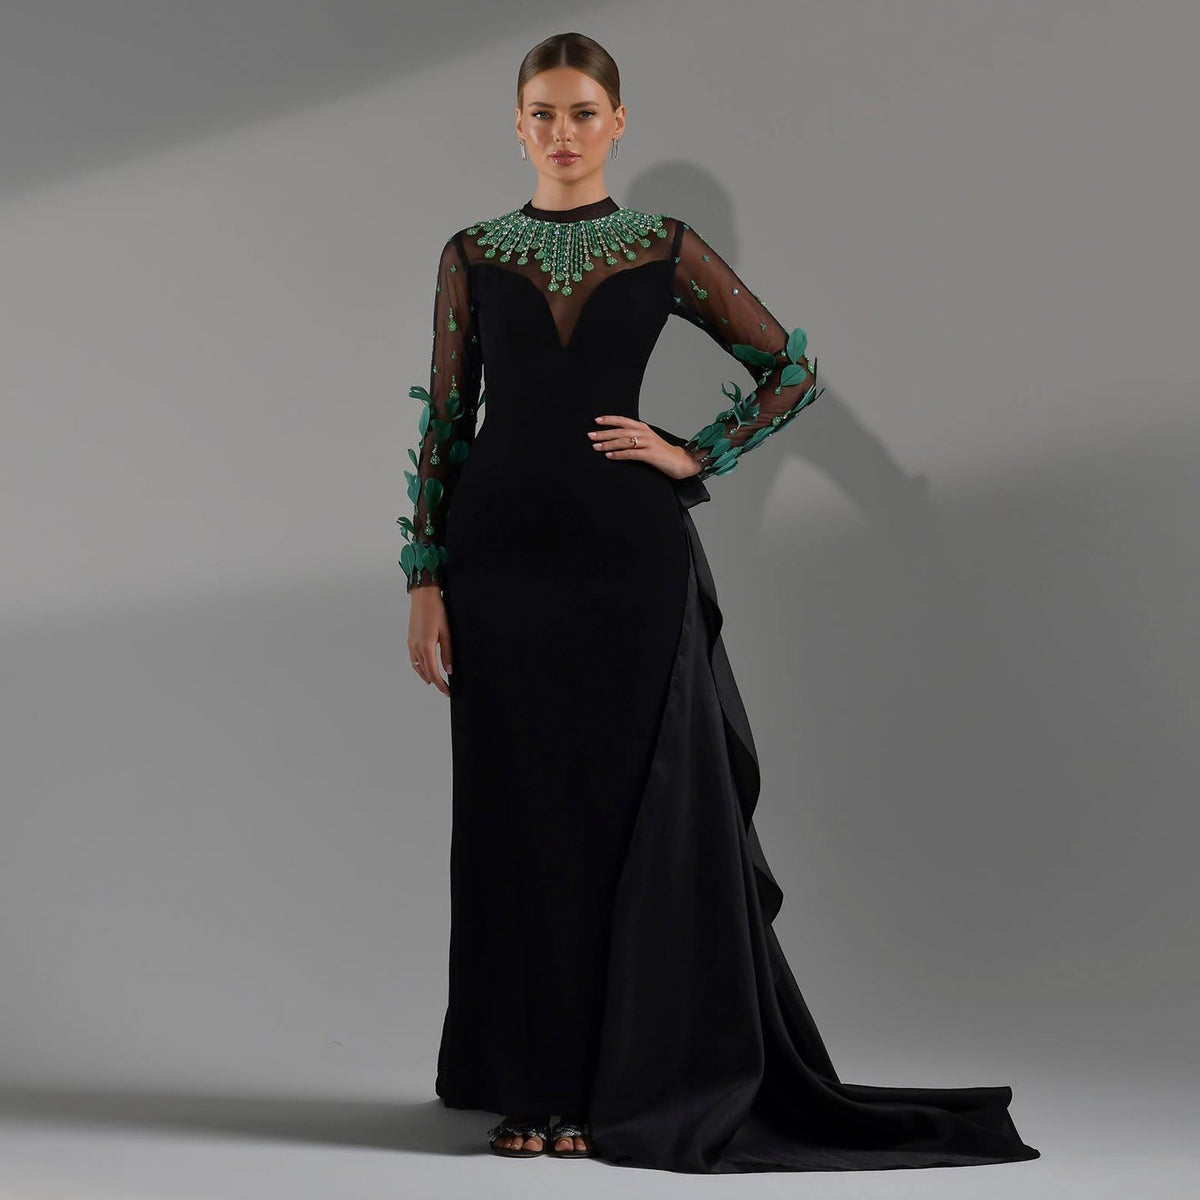 Sharon Said Luxury Dubai Emerald Green Feathers Black Evening Dress Long Sleeves Saudi Arabia Women Formal Party Gowns SS457